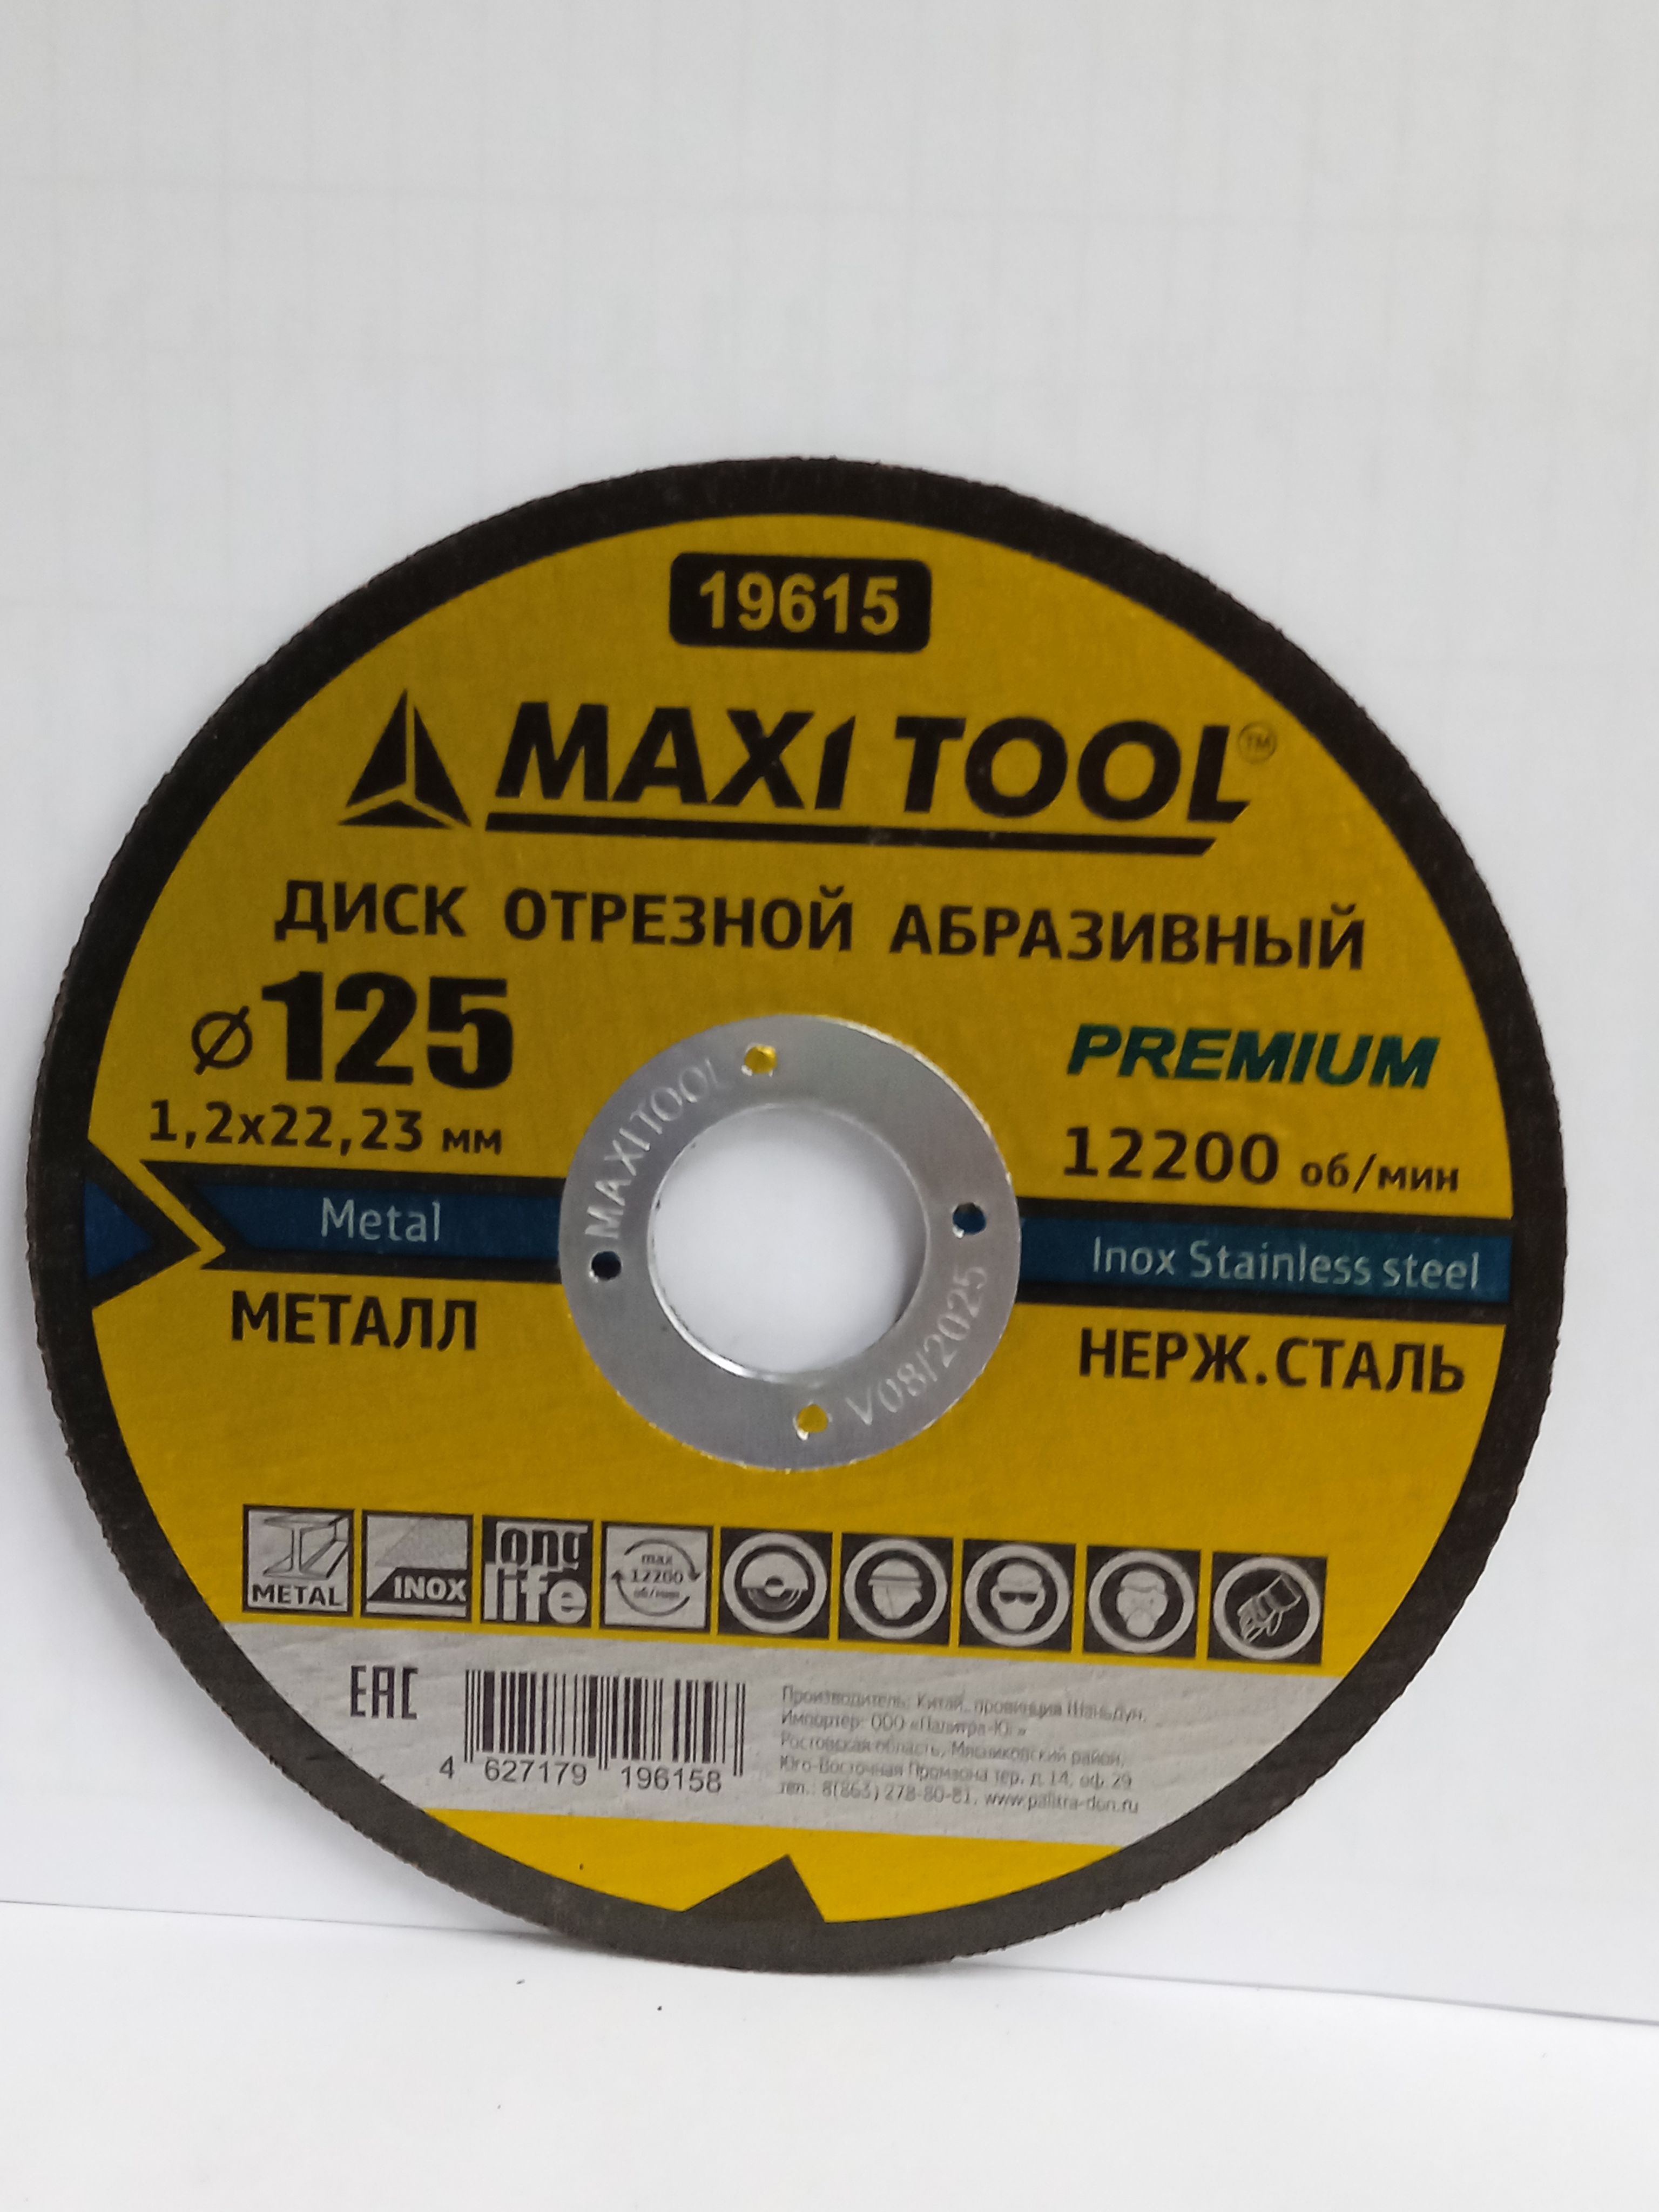 Maxi tool